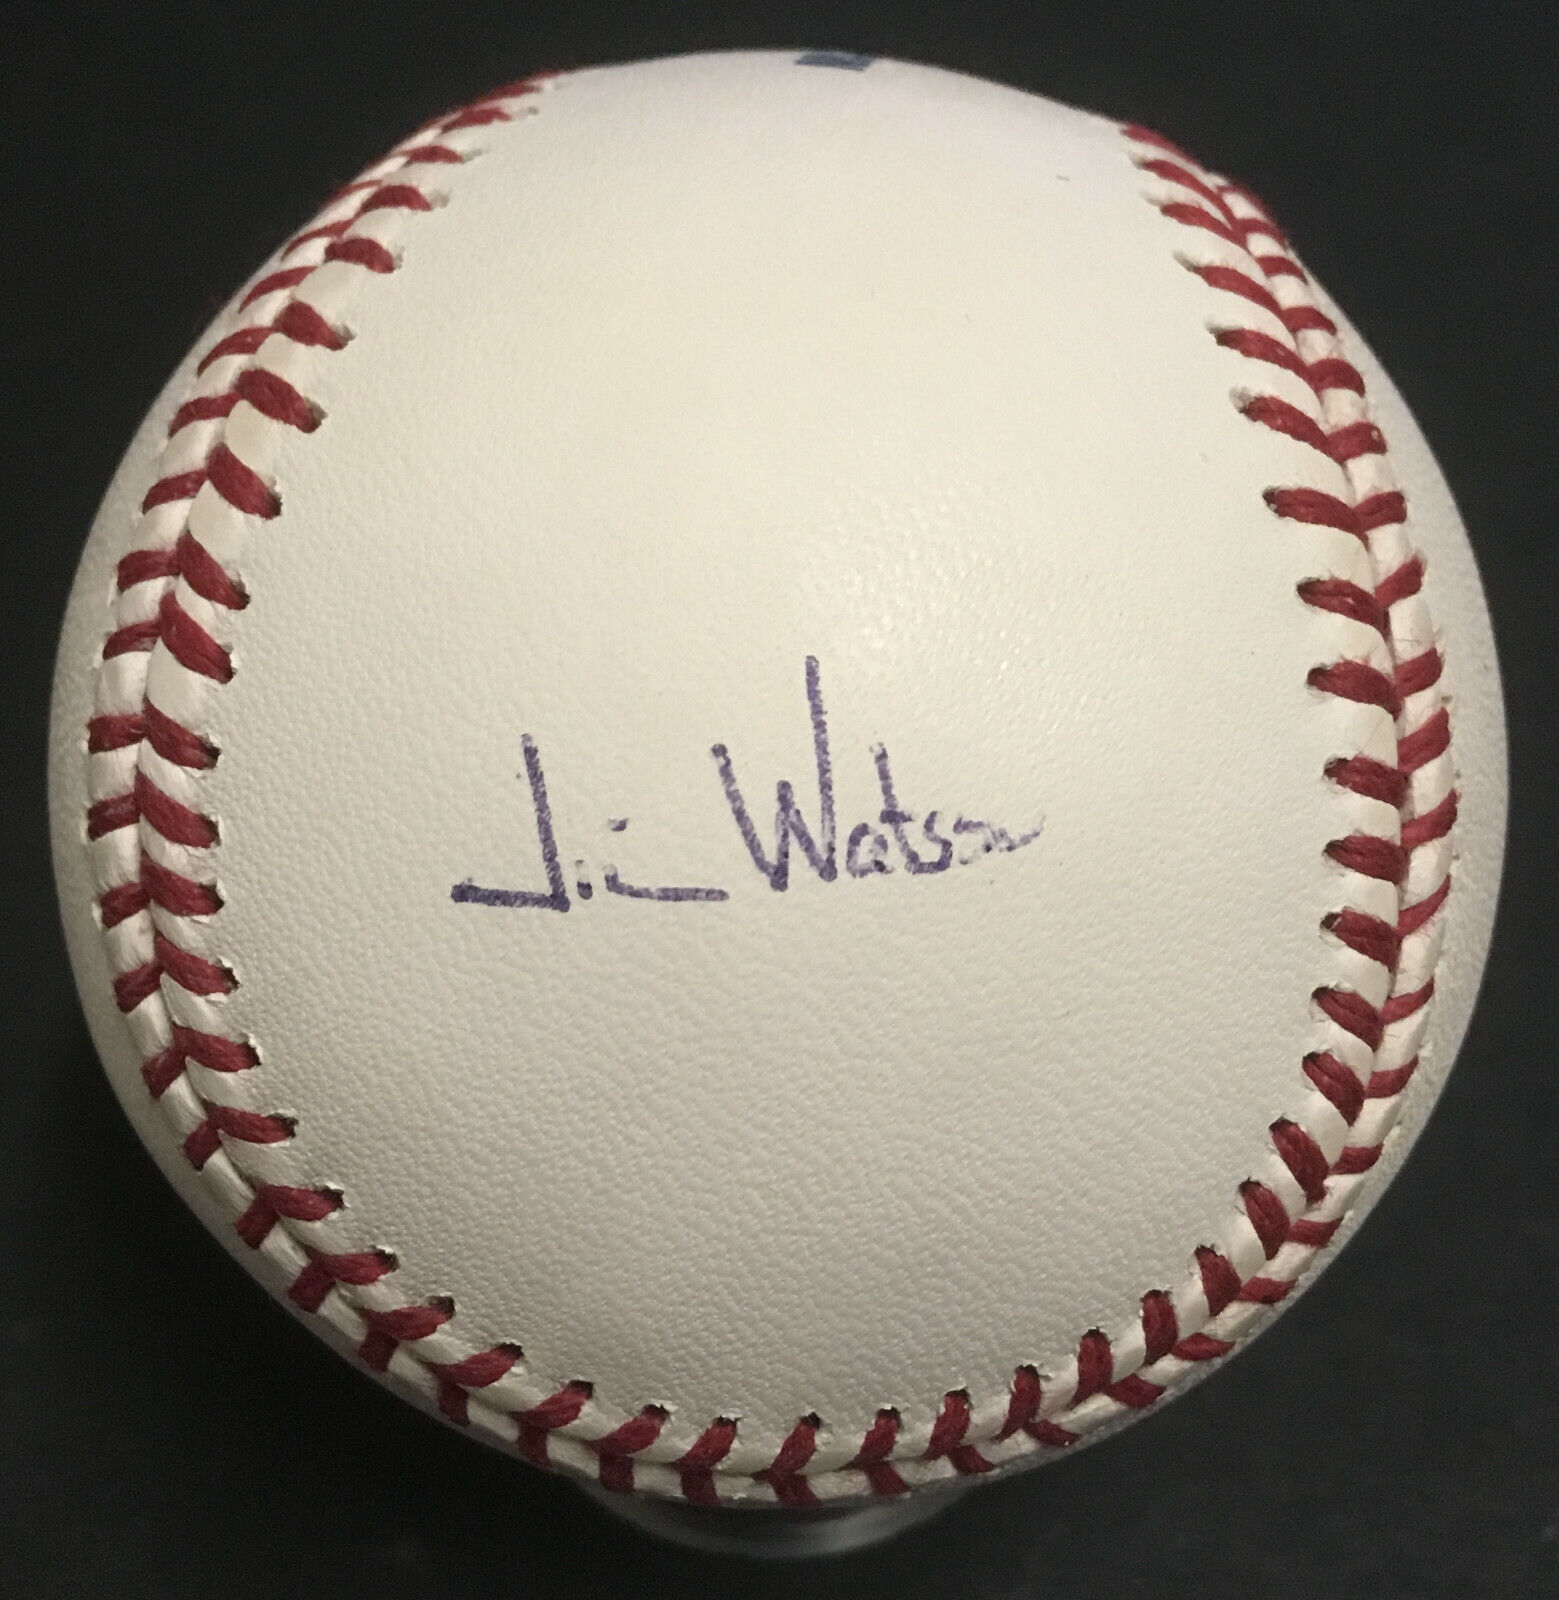 James D Jim Watson DNA founder signed official MLB Baseball autograph PSA COA